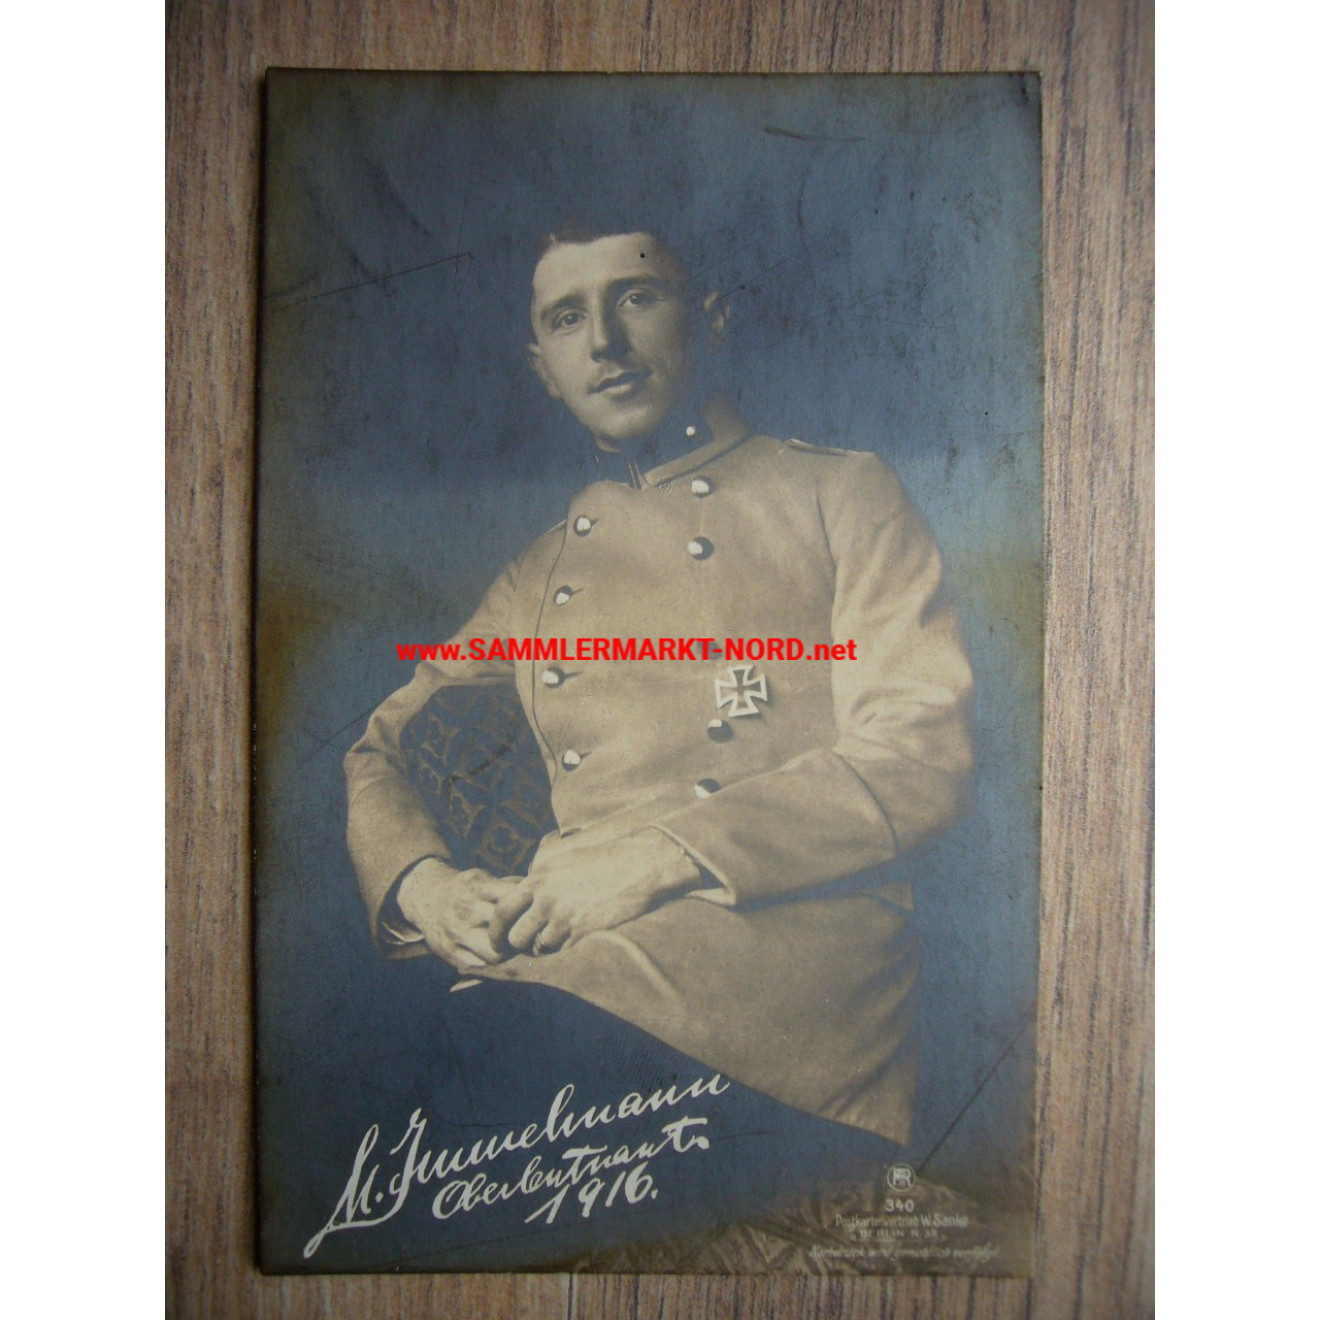 Oberleutnant MAX IMMELMANN (Pour le Merite) - Sanke Postkarte